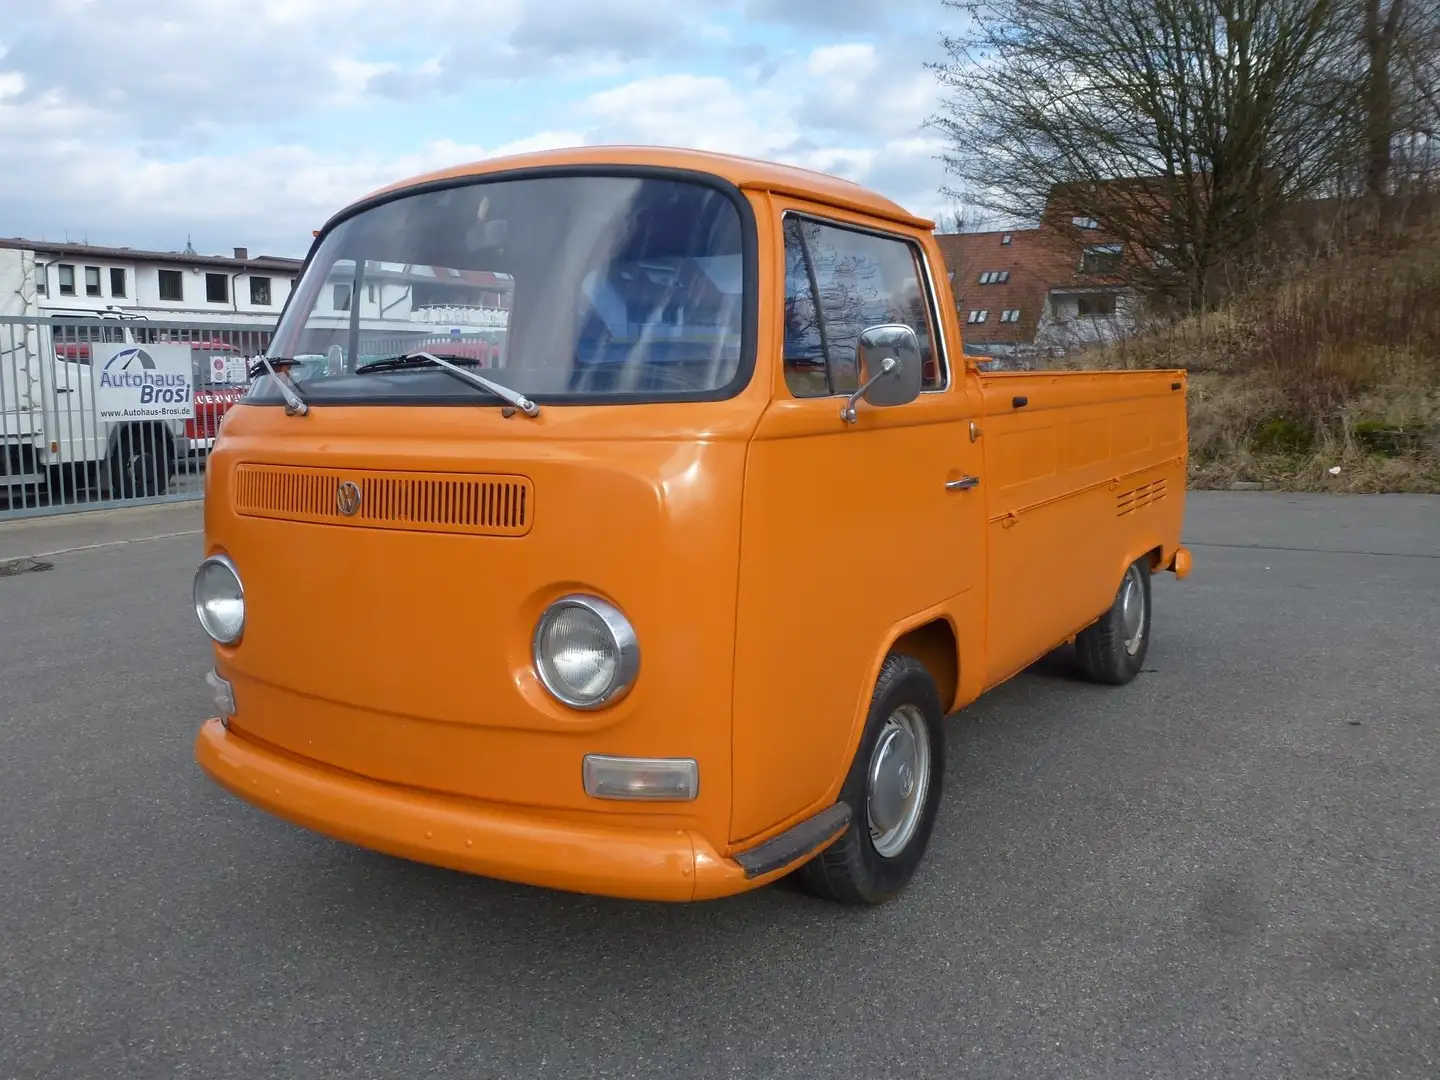 Volkswagen T2 Transporter in Orange oldtimer in Nürtingen bei Stuttgart für  € 9.950,-